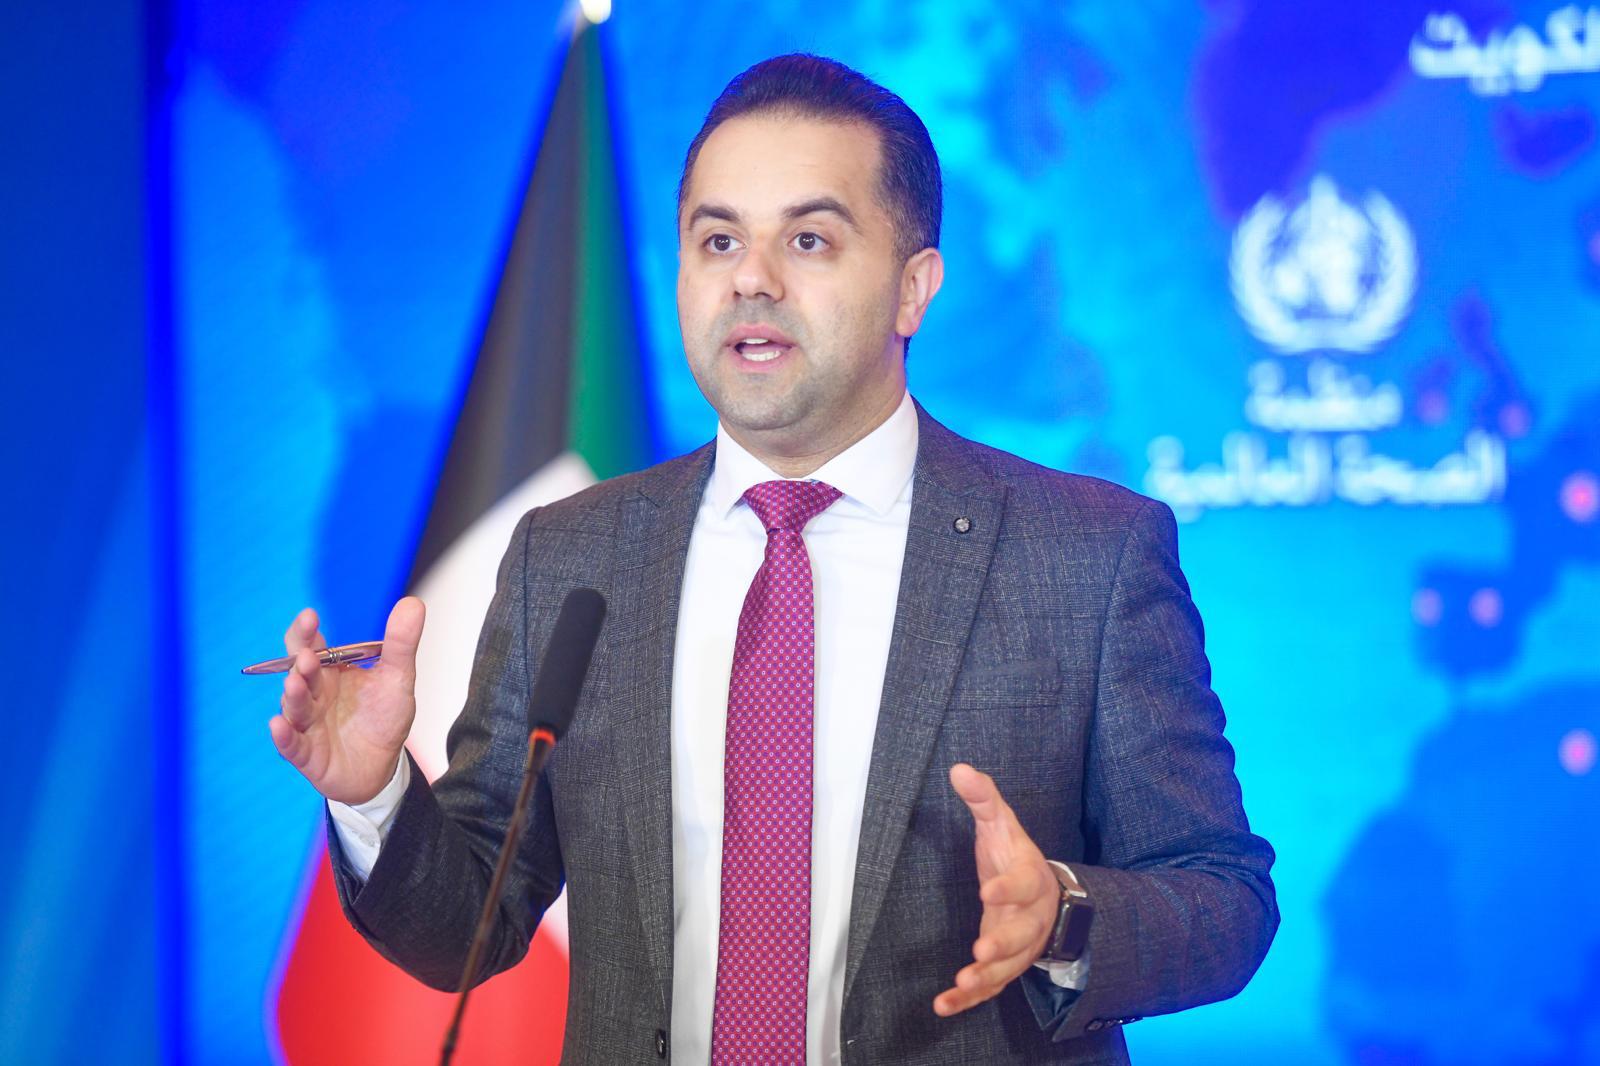 Ministry of Health spokesman Abdullah Al-Sanad